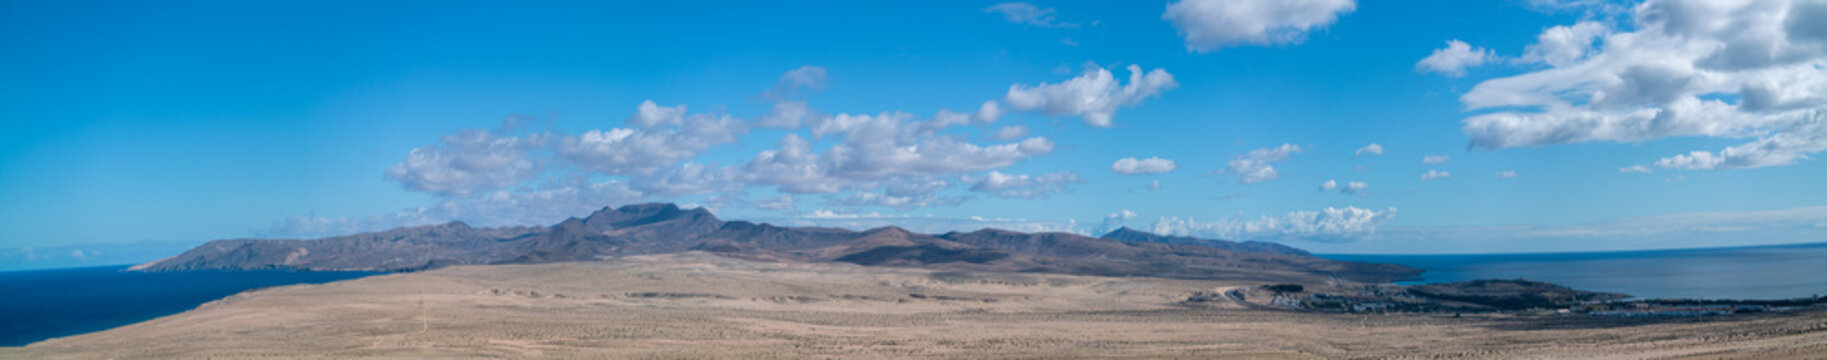 Istmo de la Pared - Fuerteventura at its narrowest point. Stone desert